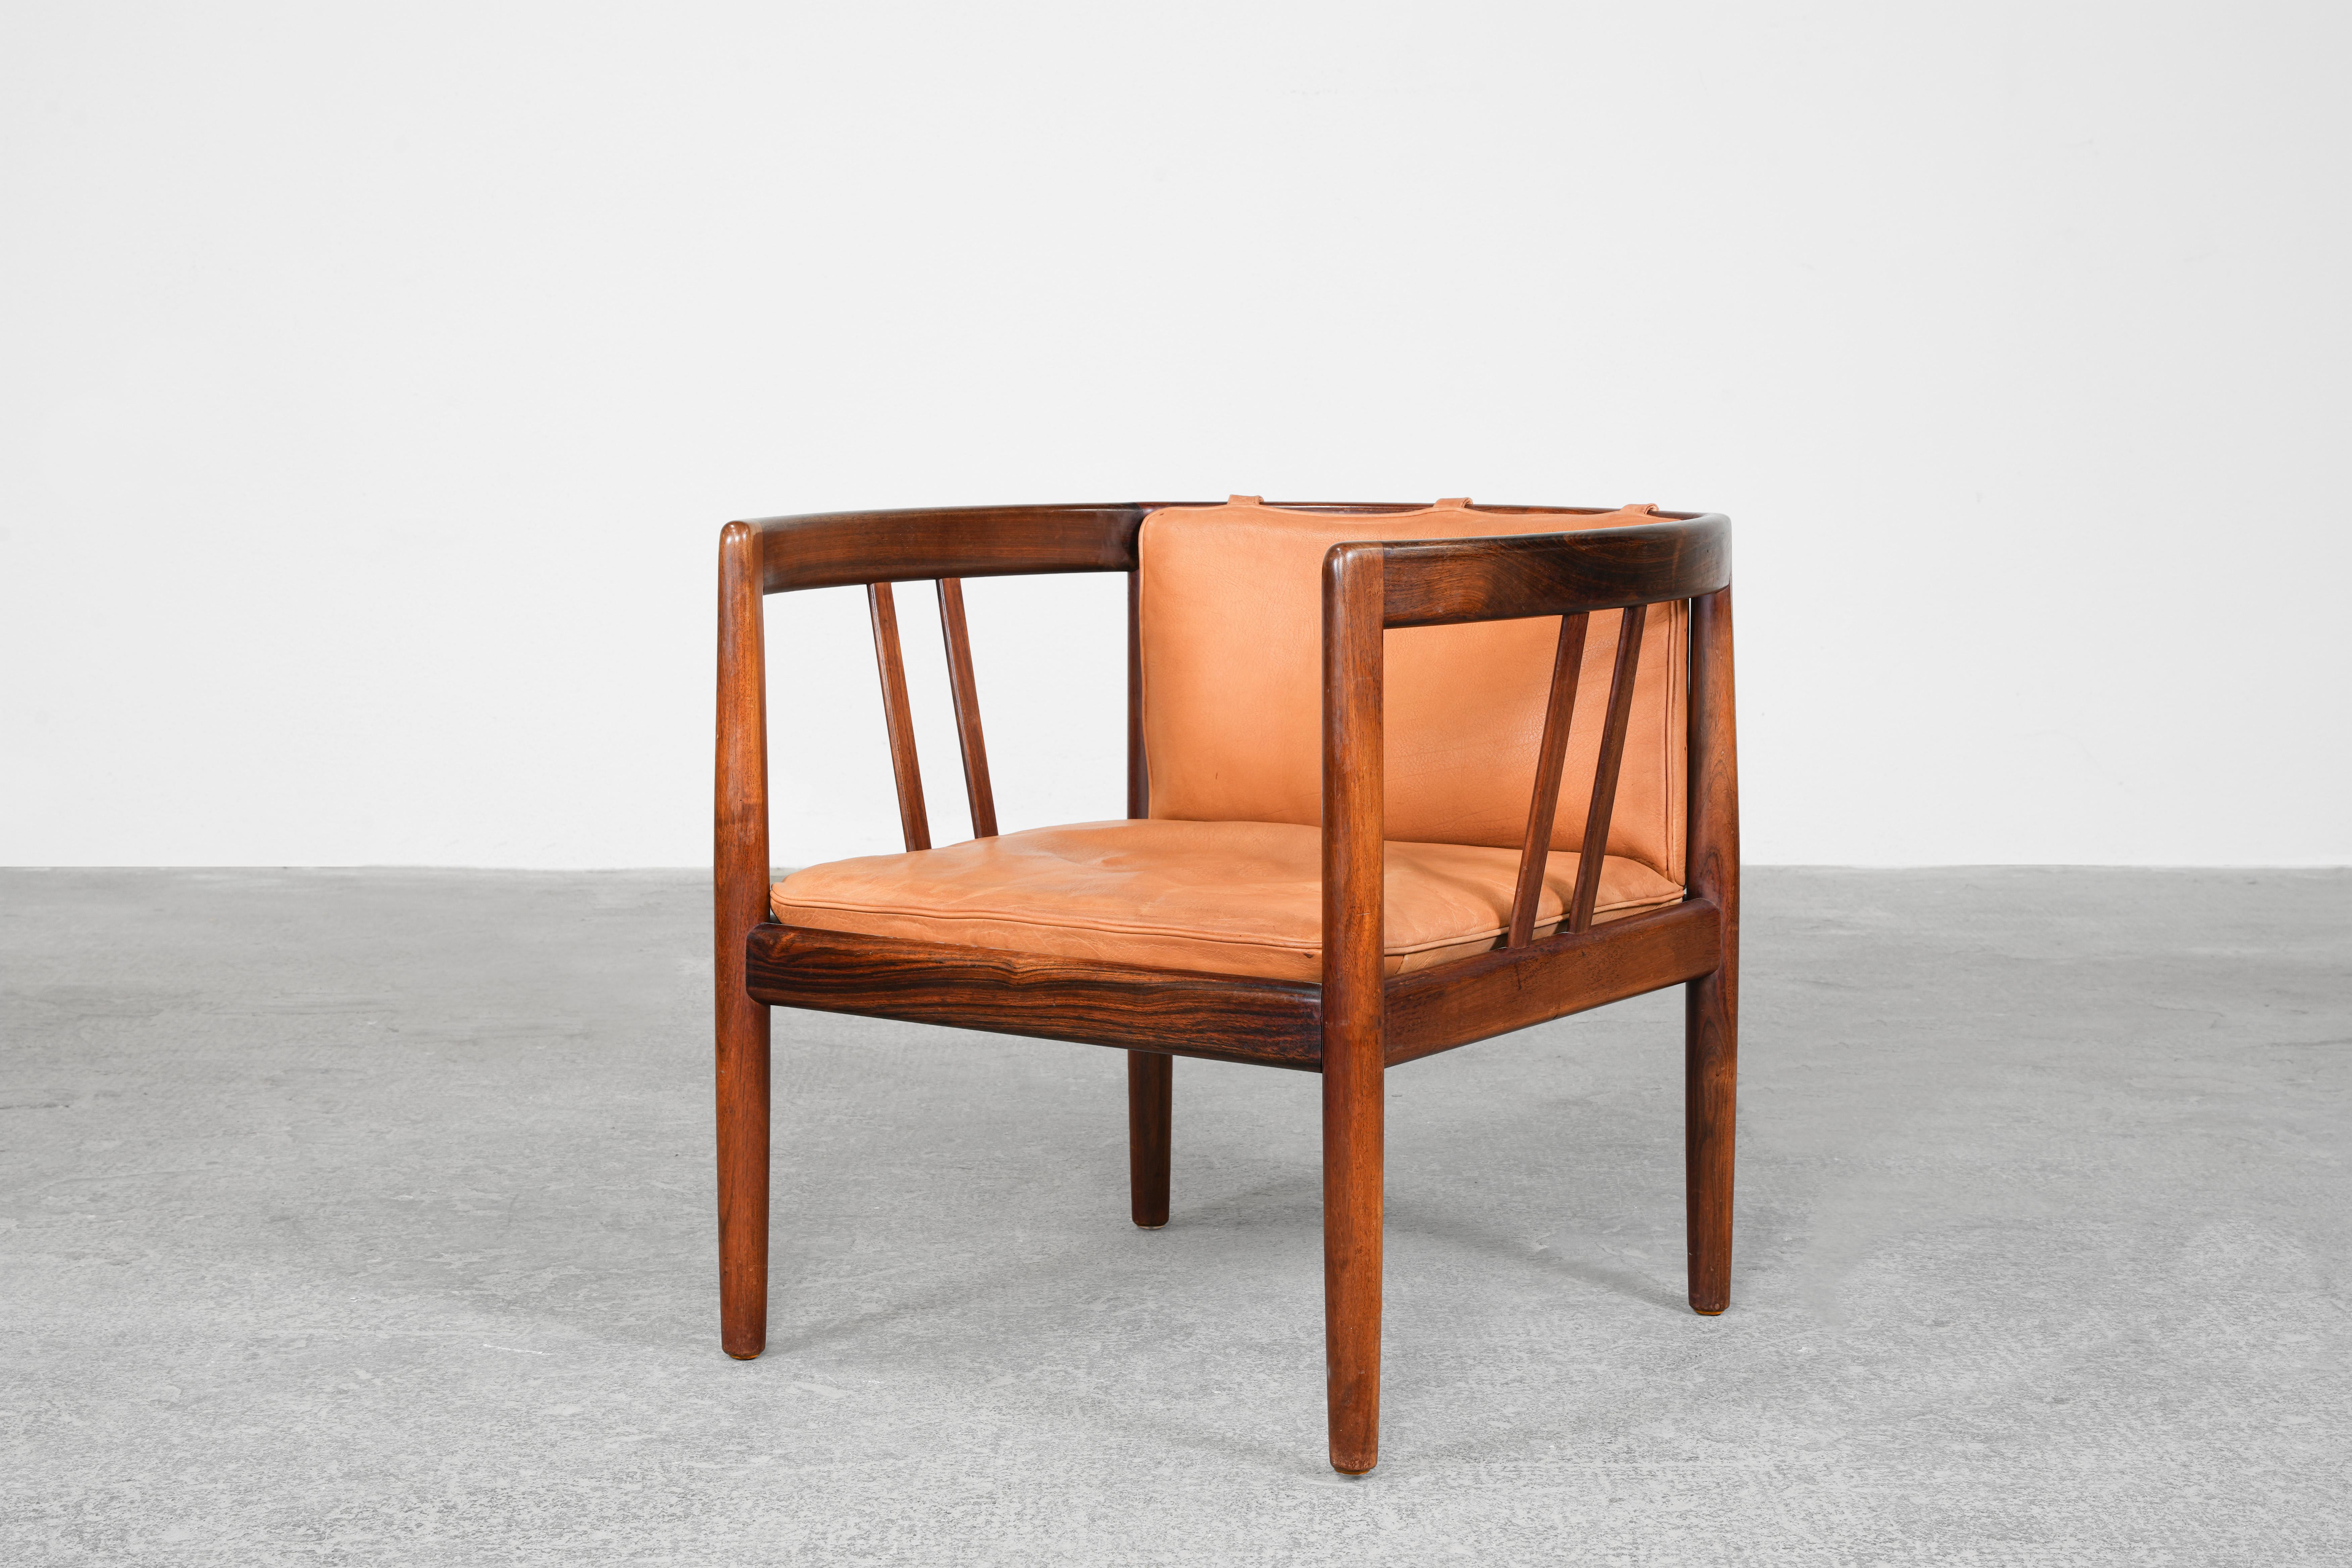 20th Century Pair of Danish Lounge Chairs by Illum Wikkelsø for Holger Christiansen, 1962 For Sale